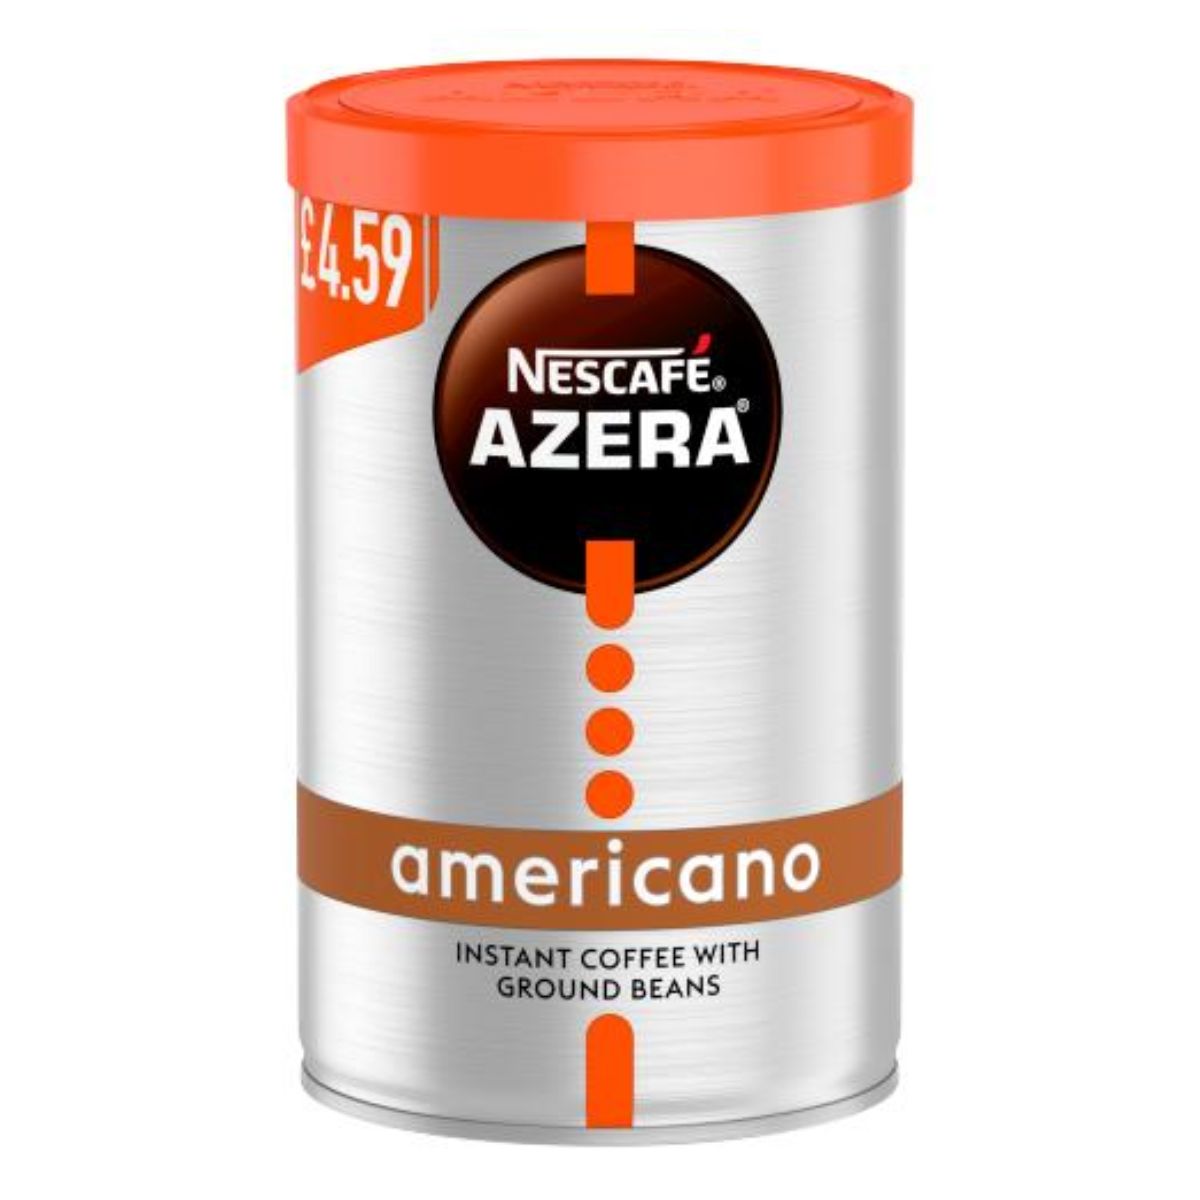 Sentence with product name: Nescafe Azera Americano 90g coffee tin.